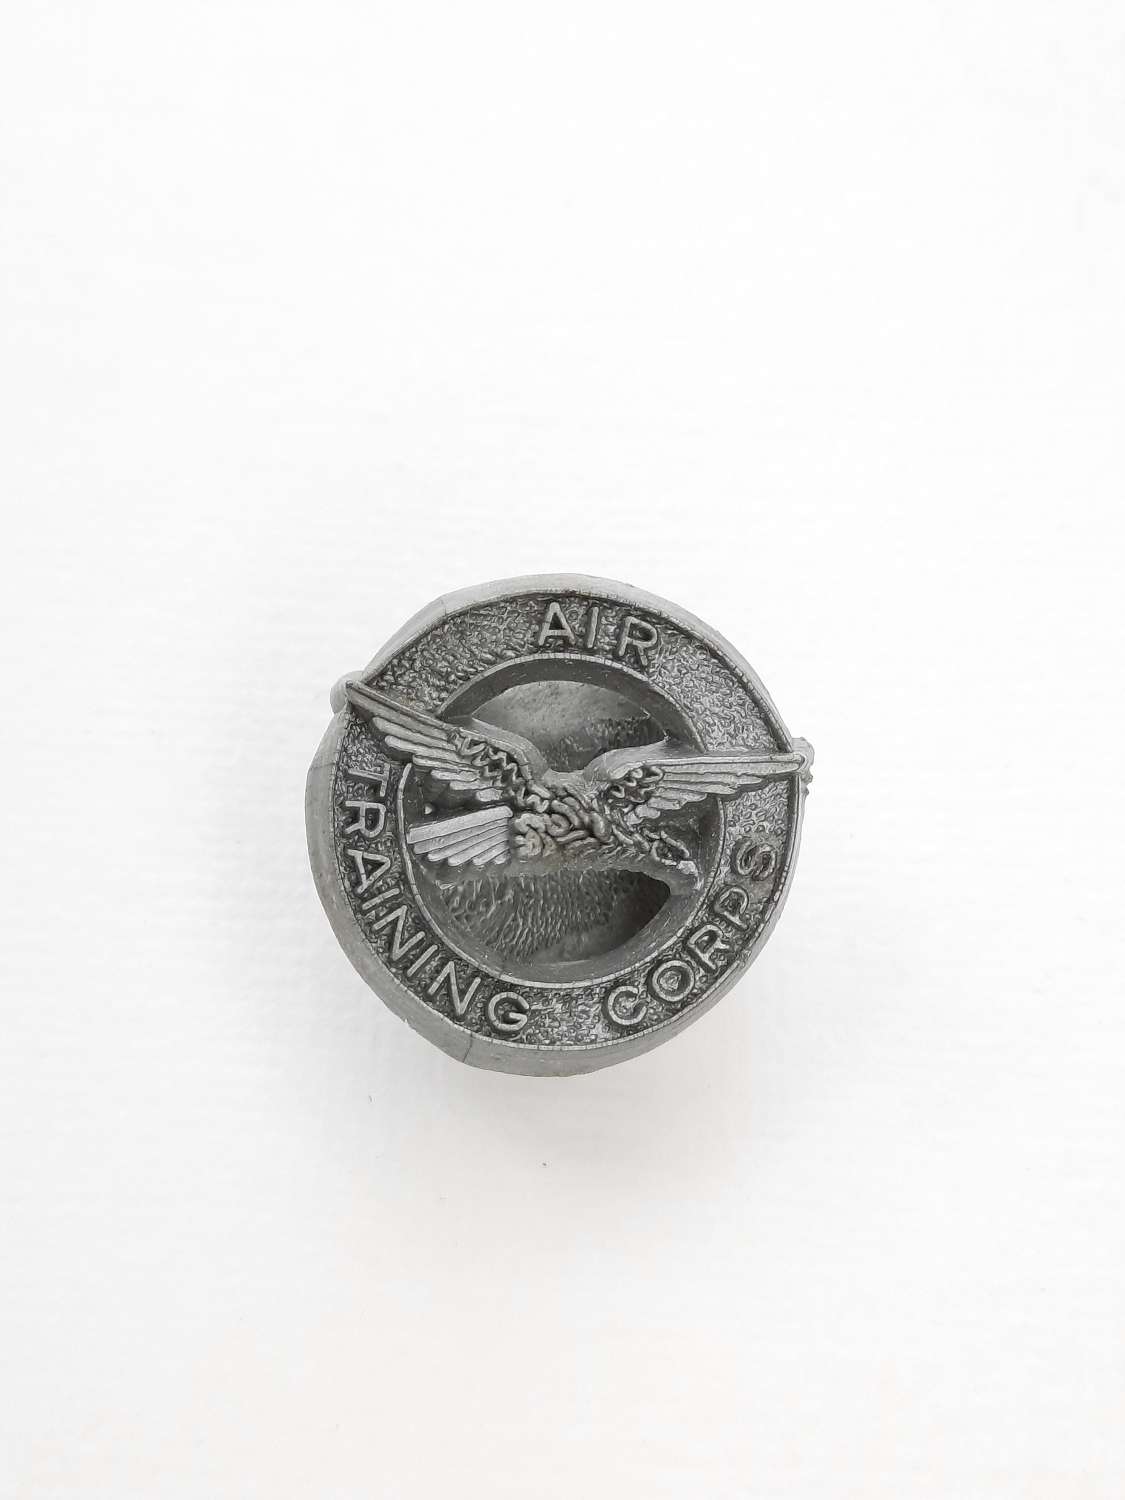 WW2 ATC Plastic Lapel Badge